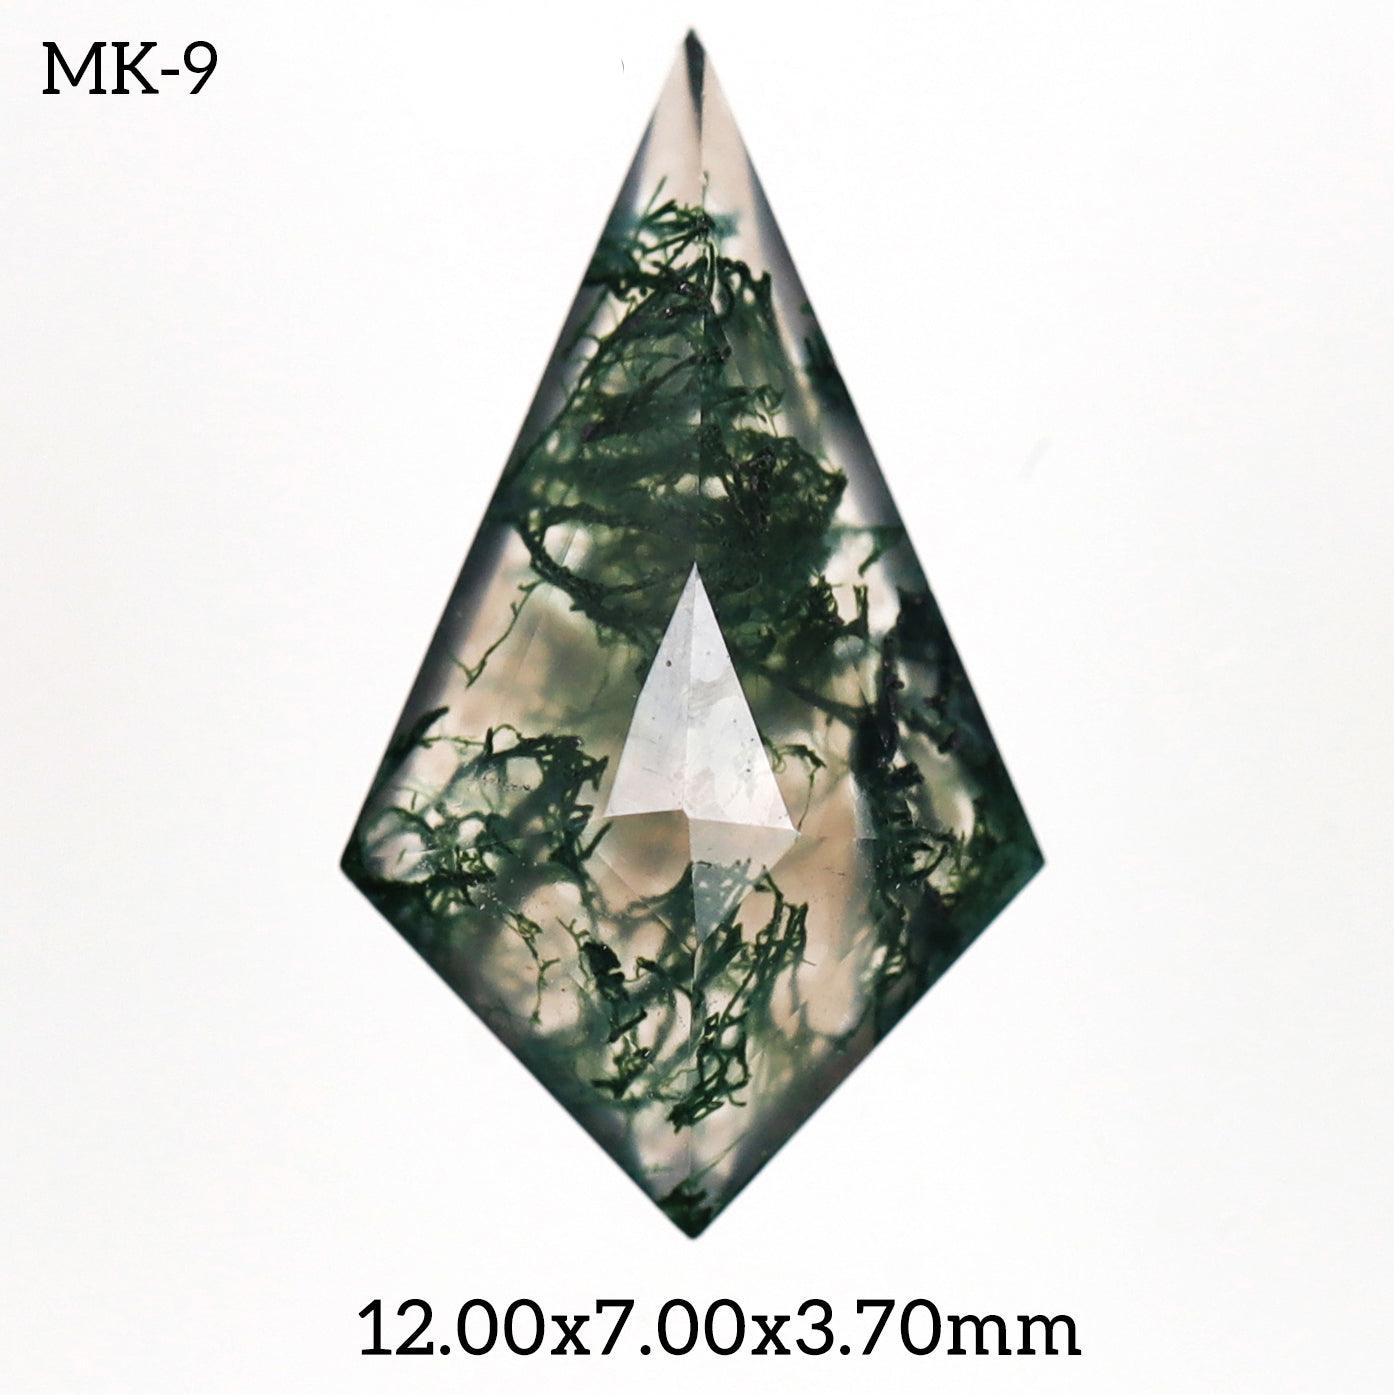 MK - 9 Moss Agate Kite Gemstone - Rubysta